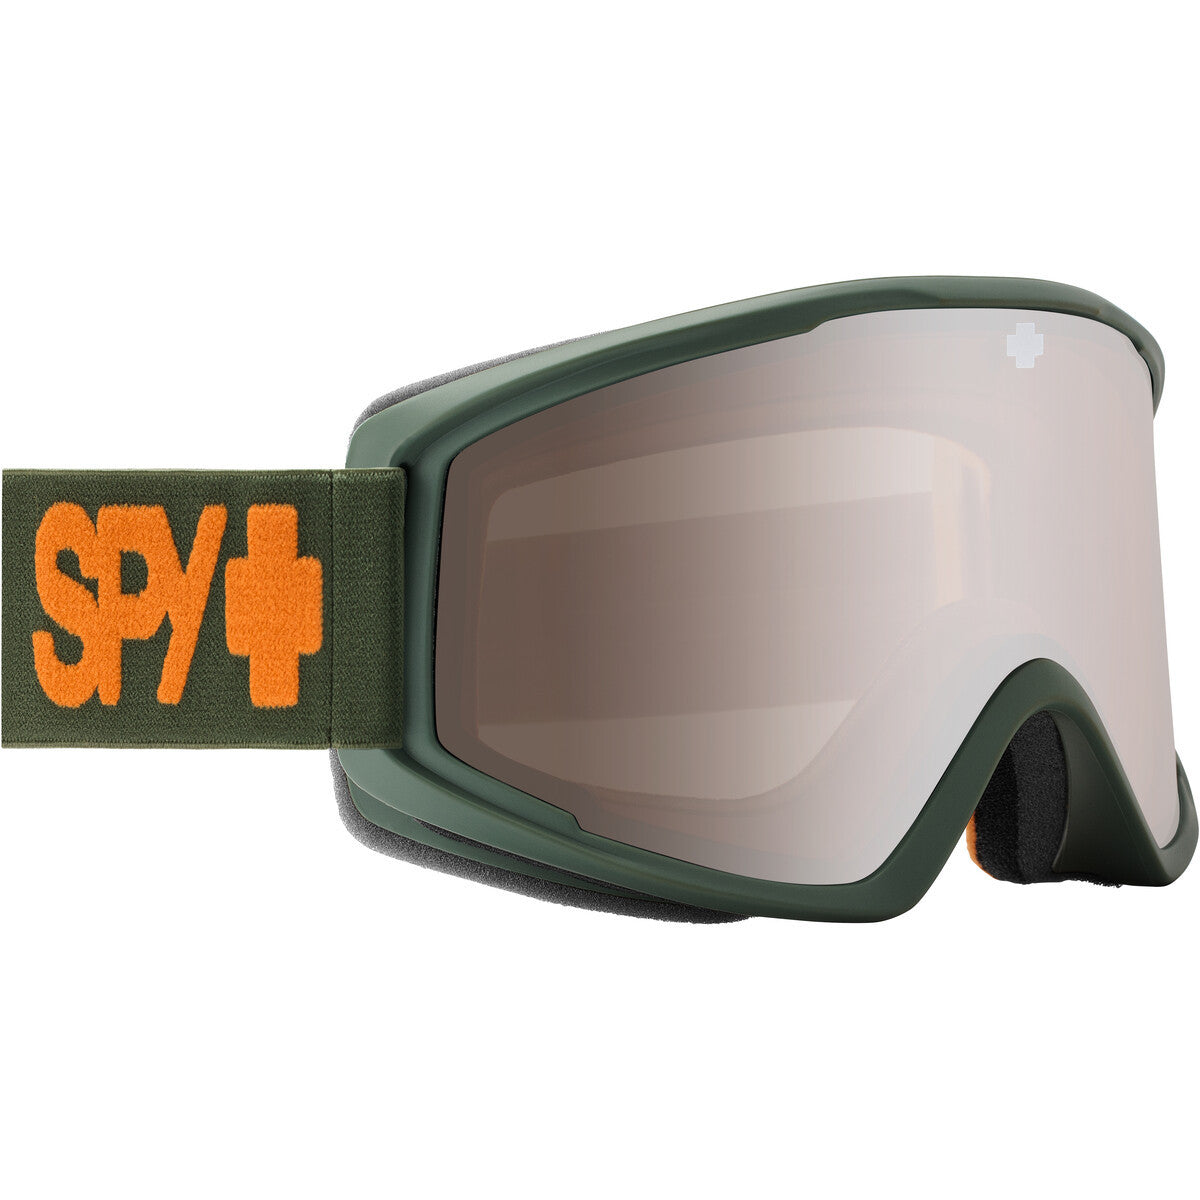 Spy CRUSHER ELITE Goggles  Matte Steel Green Medium-Large M-L 54-61